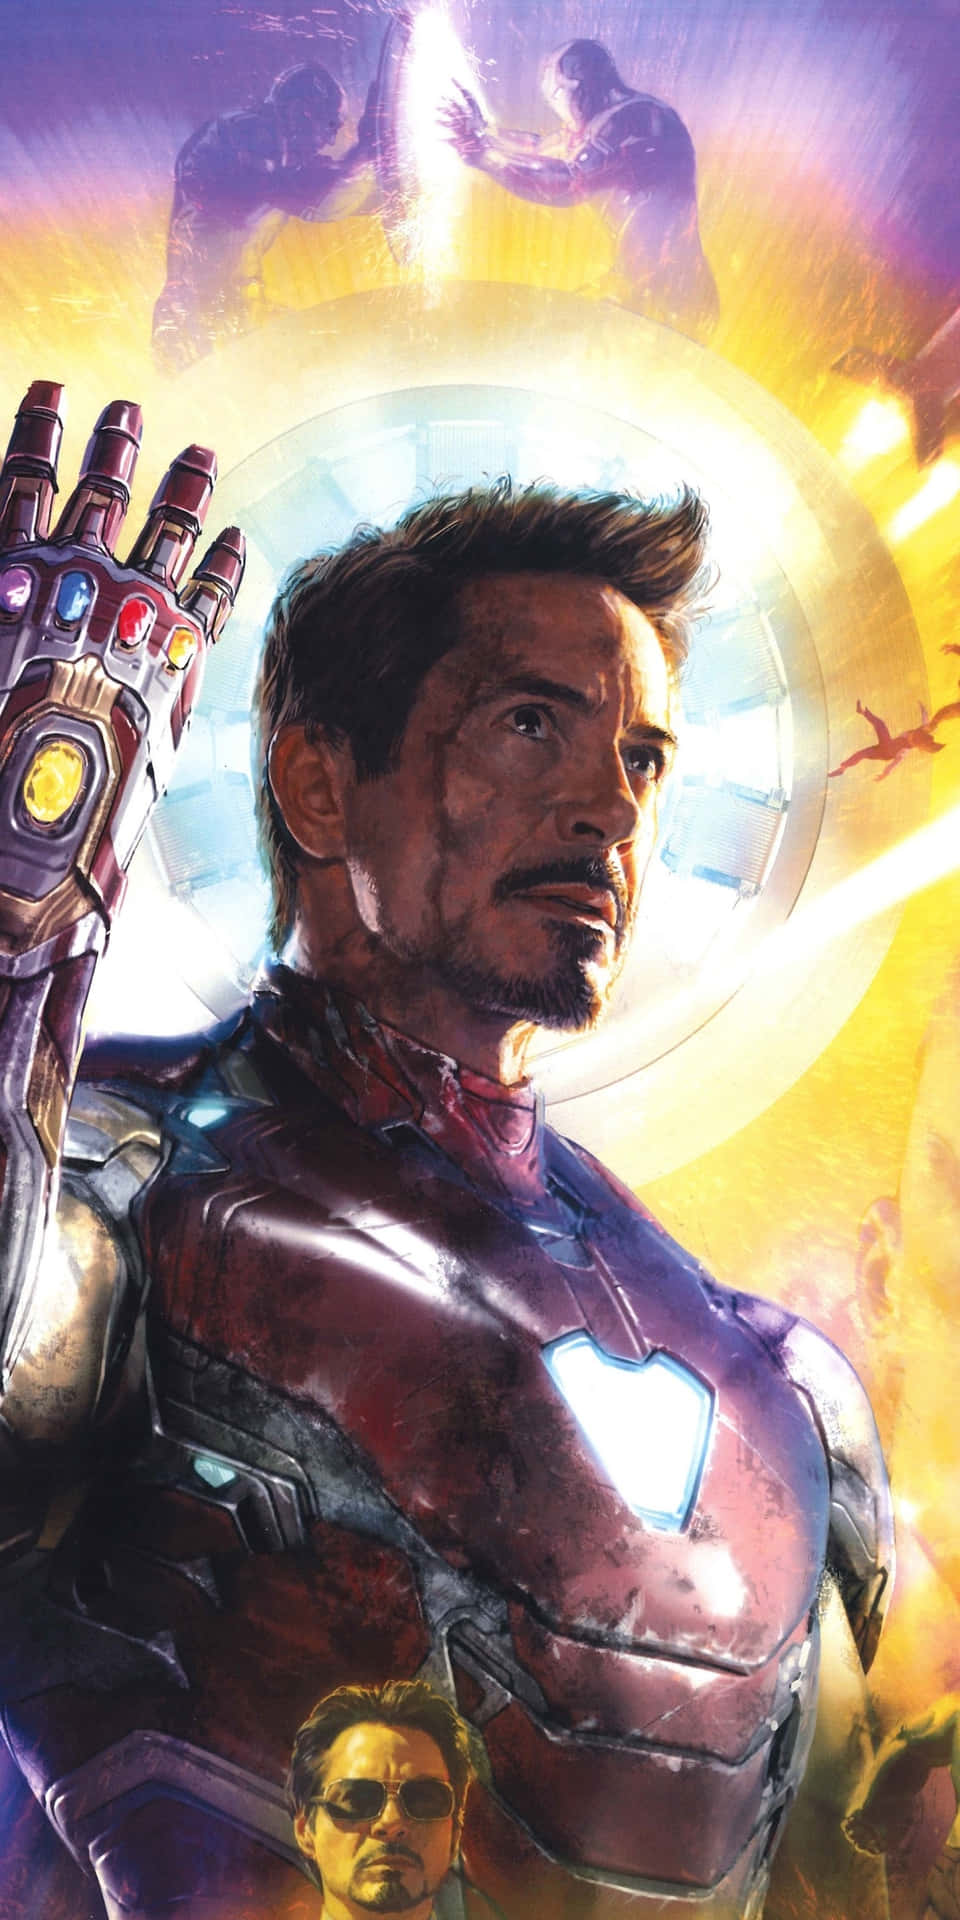 Pixel 3 Iron Mand Infinity Gauntlet baggrund: Passe som et Infinity Gauntlet baggrundsbillede til Pixel 3.